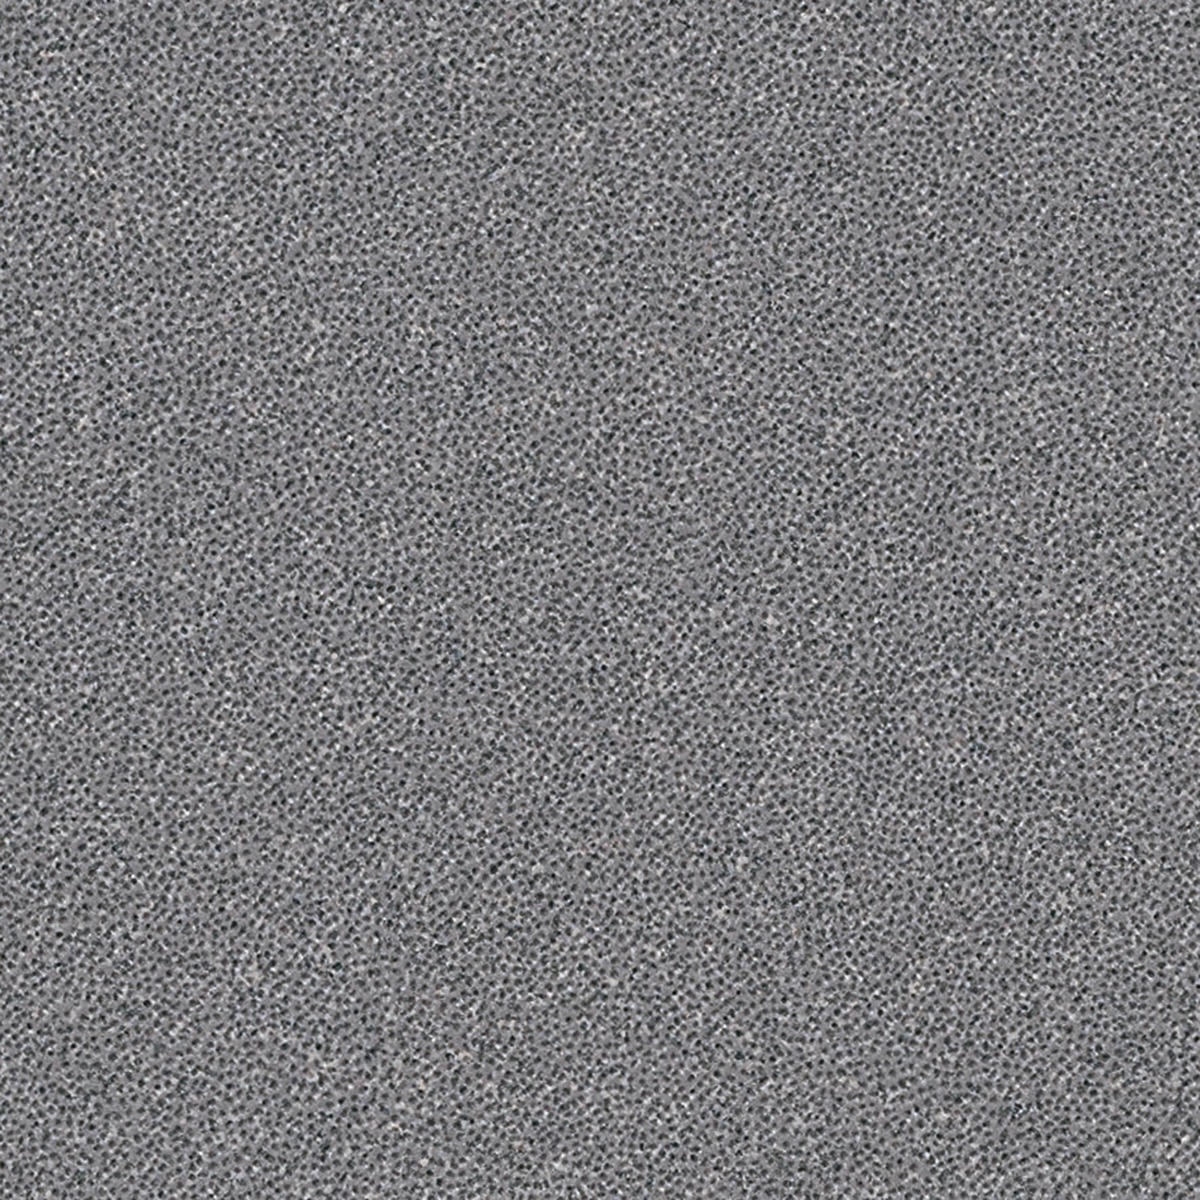 Dlažba Rako Taurus Granit antracitově šedá 30x30 cm protiskluz TRM34065.1 Rako